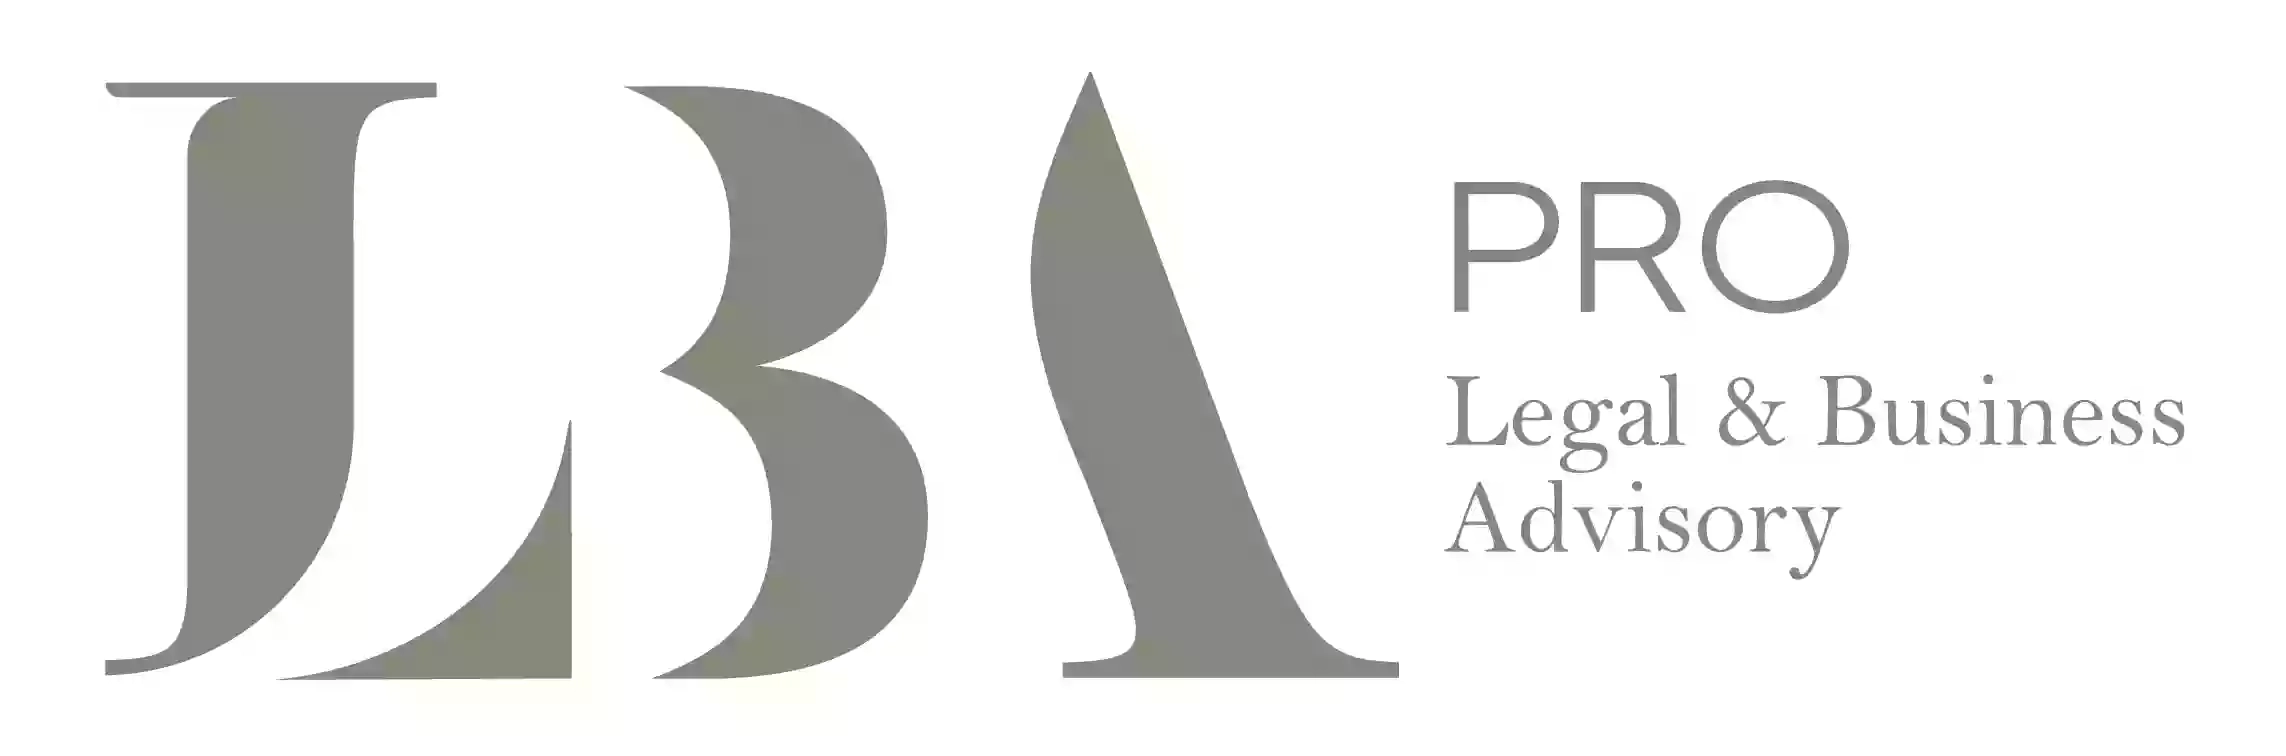 LBA Pro Legal & Business Advisory